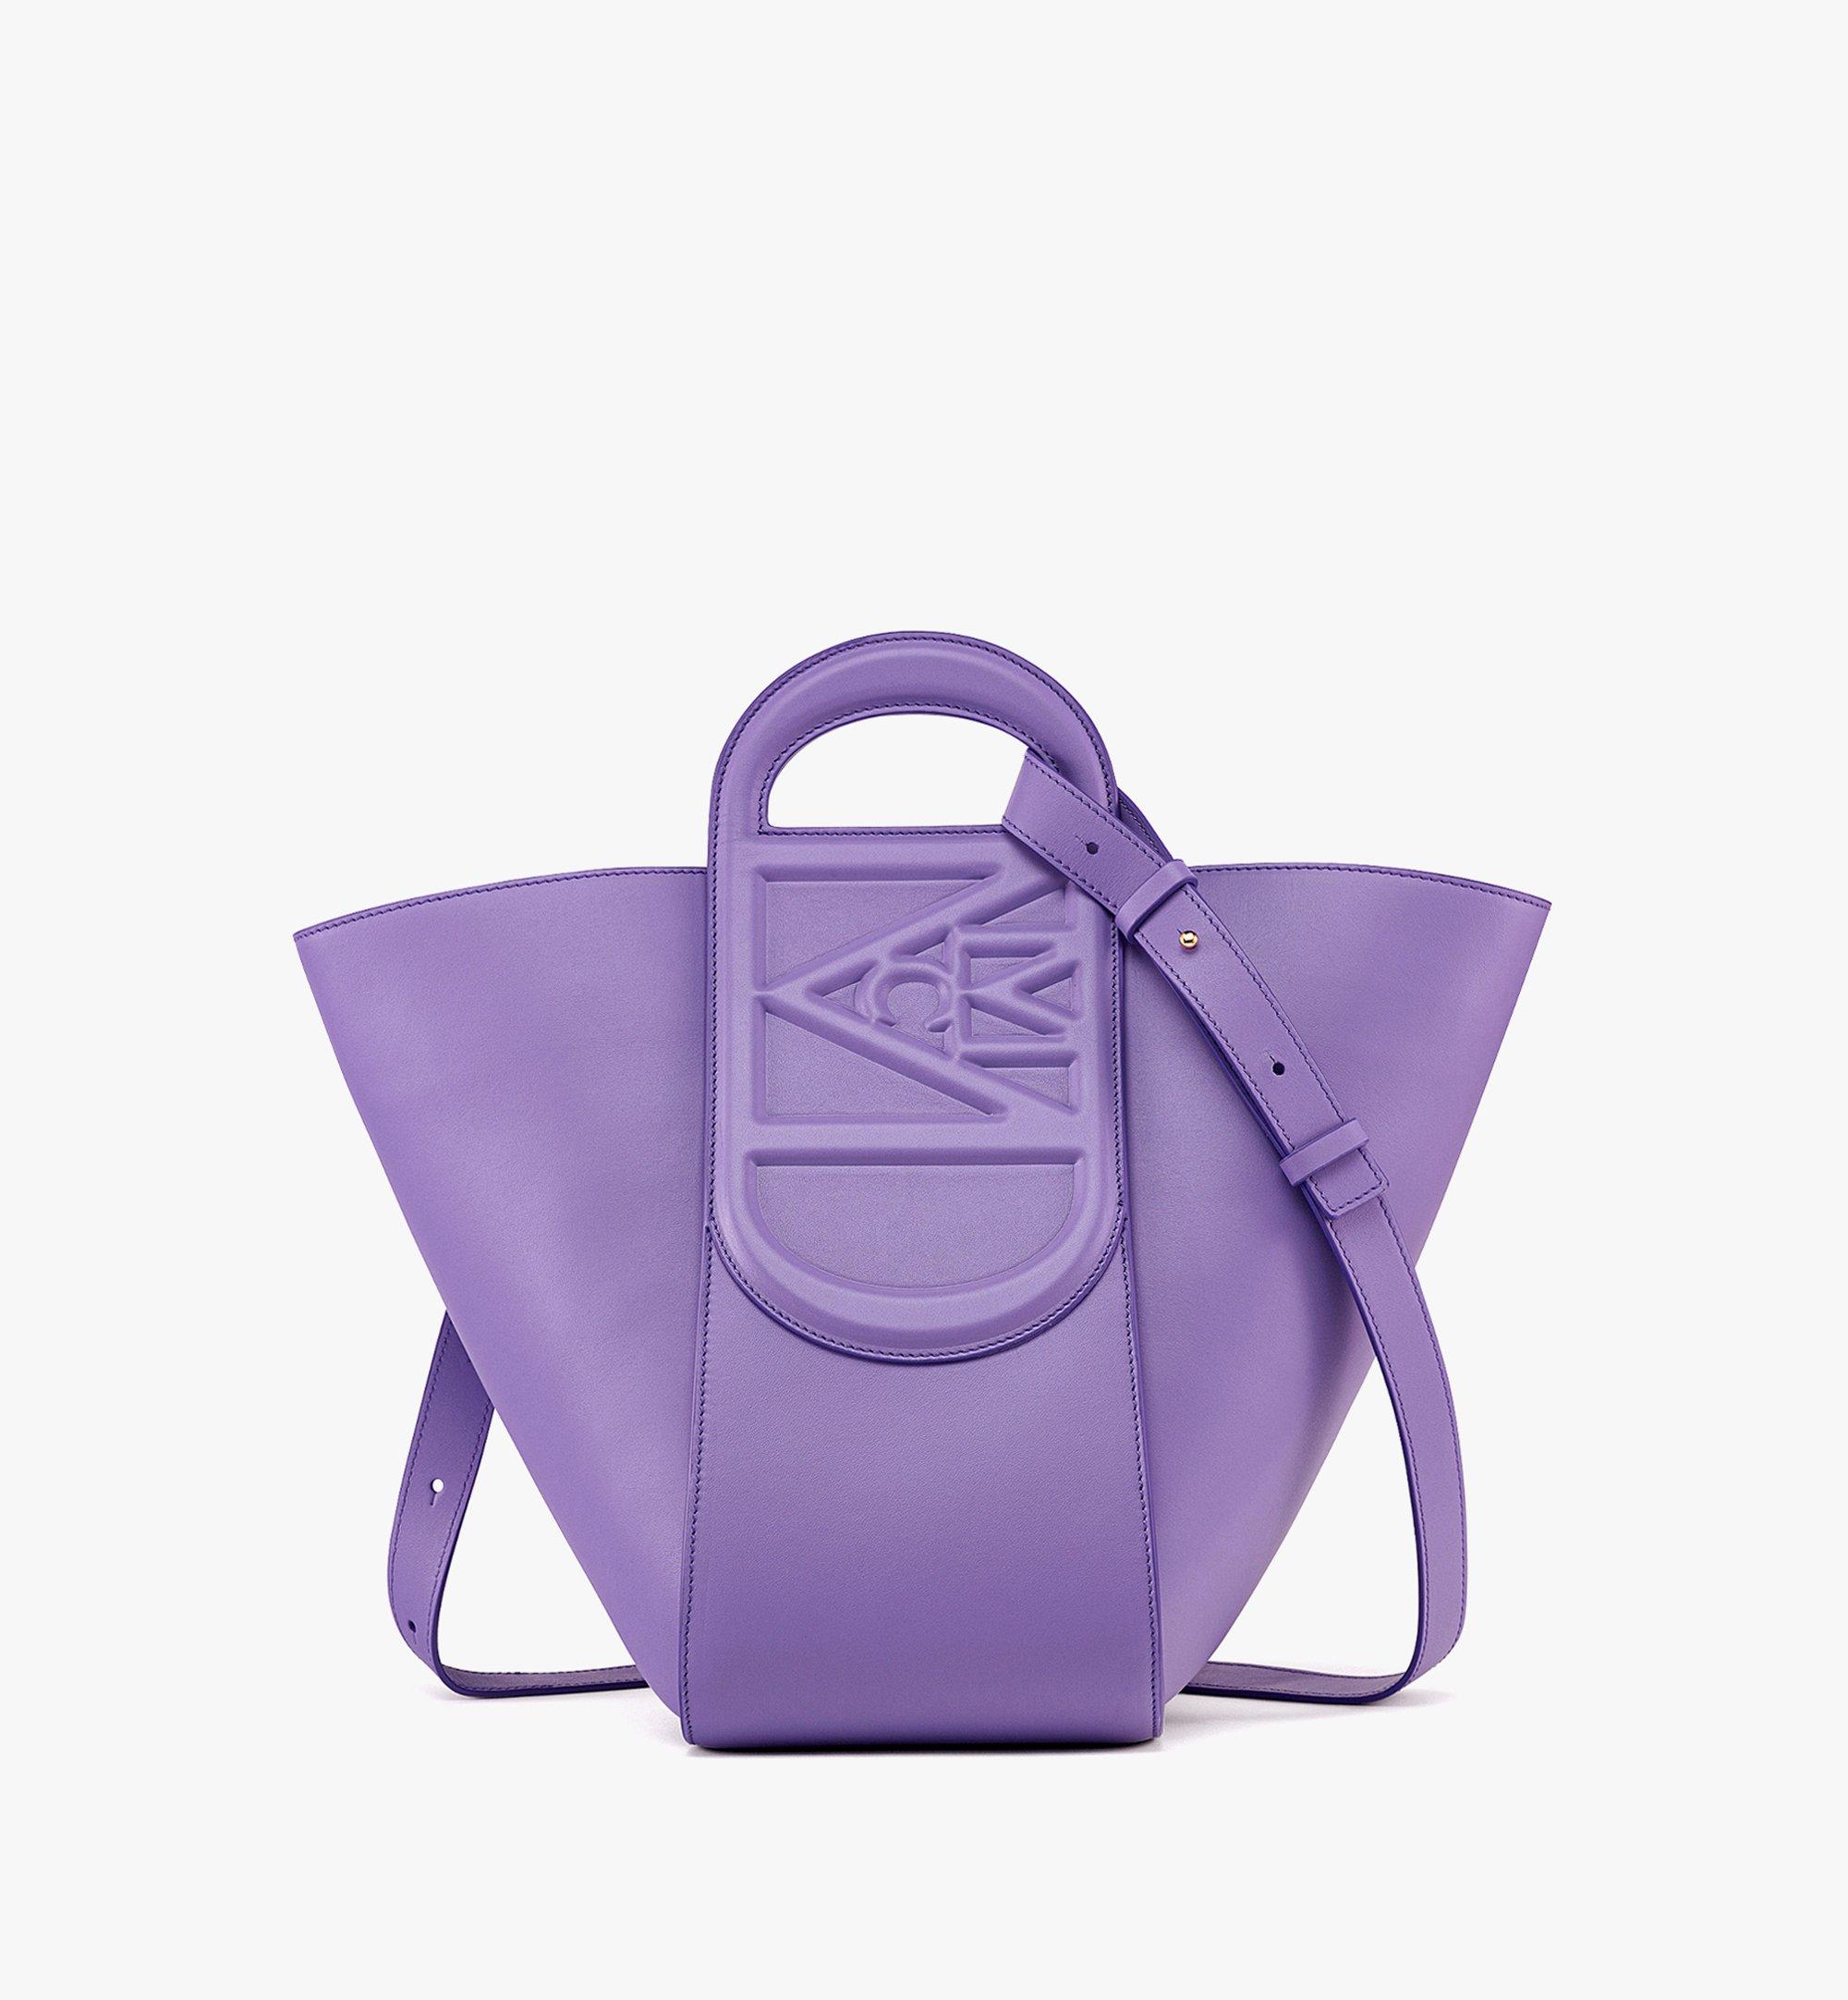 Pink MCM Bag - Women's Handbags - Newark, California, Facebook Marketplace